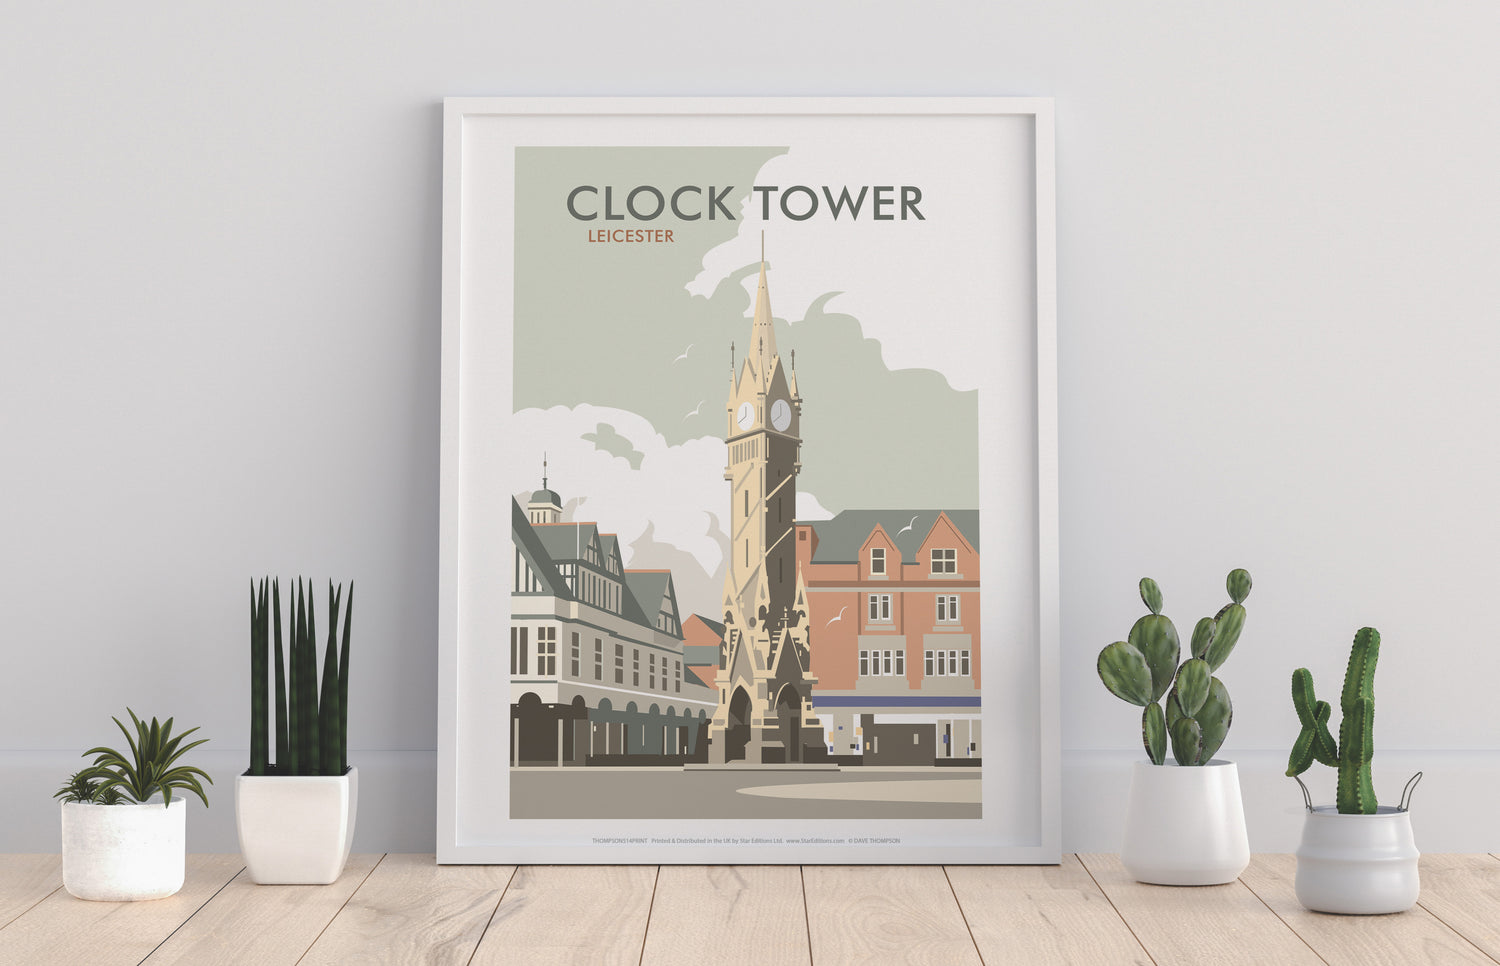 Clock Tower, Leicester - Art Print